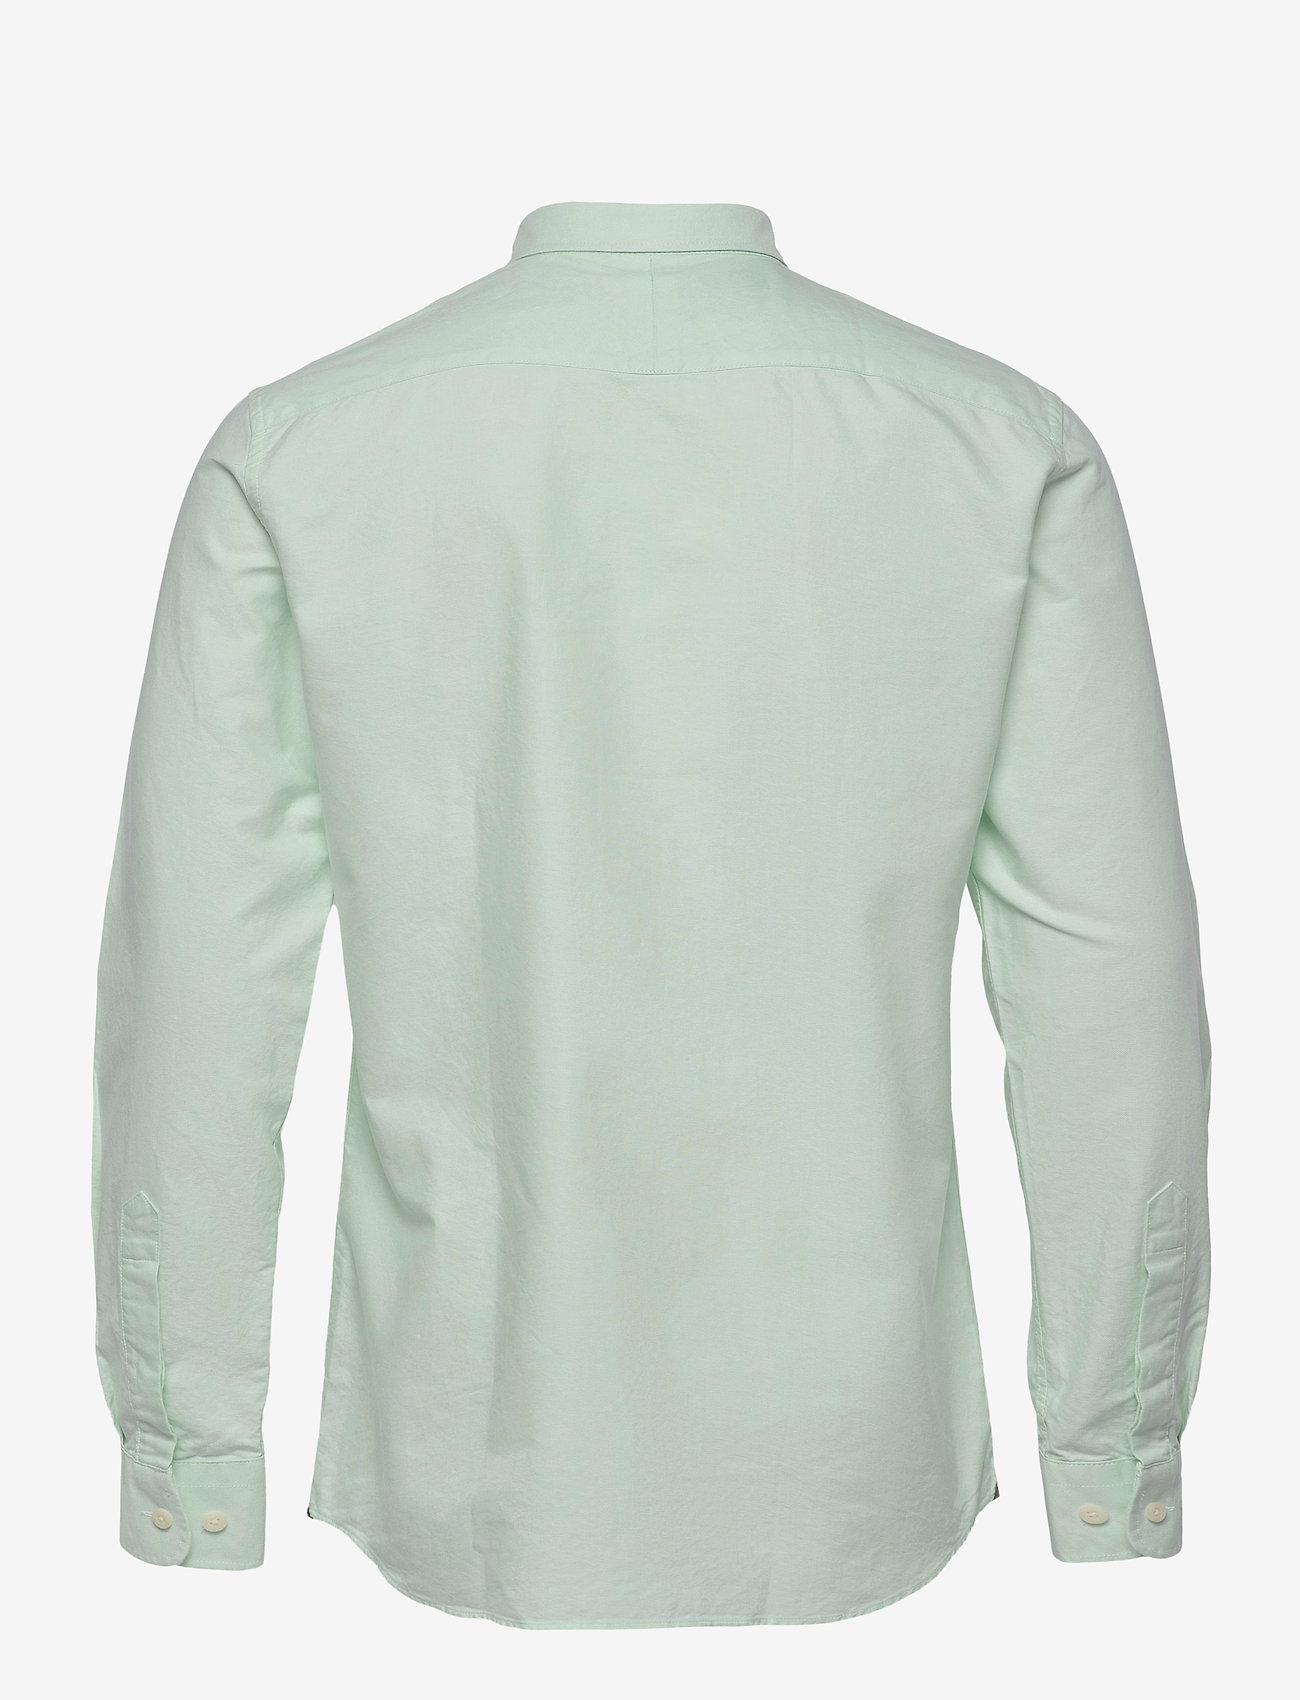 Morris - Douglas Shirt-Slim Fit - peruskauluspaidat - turquoise - 1